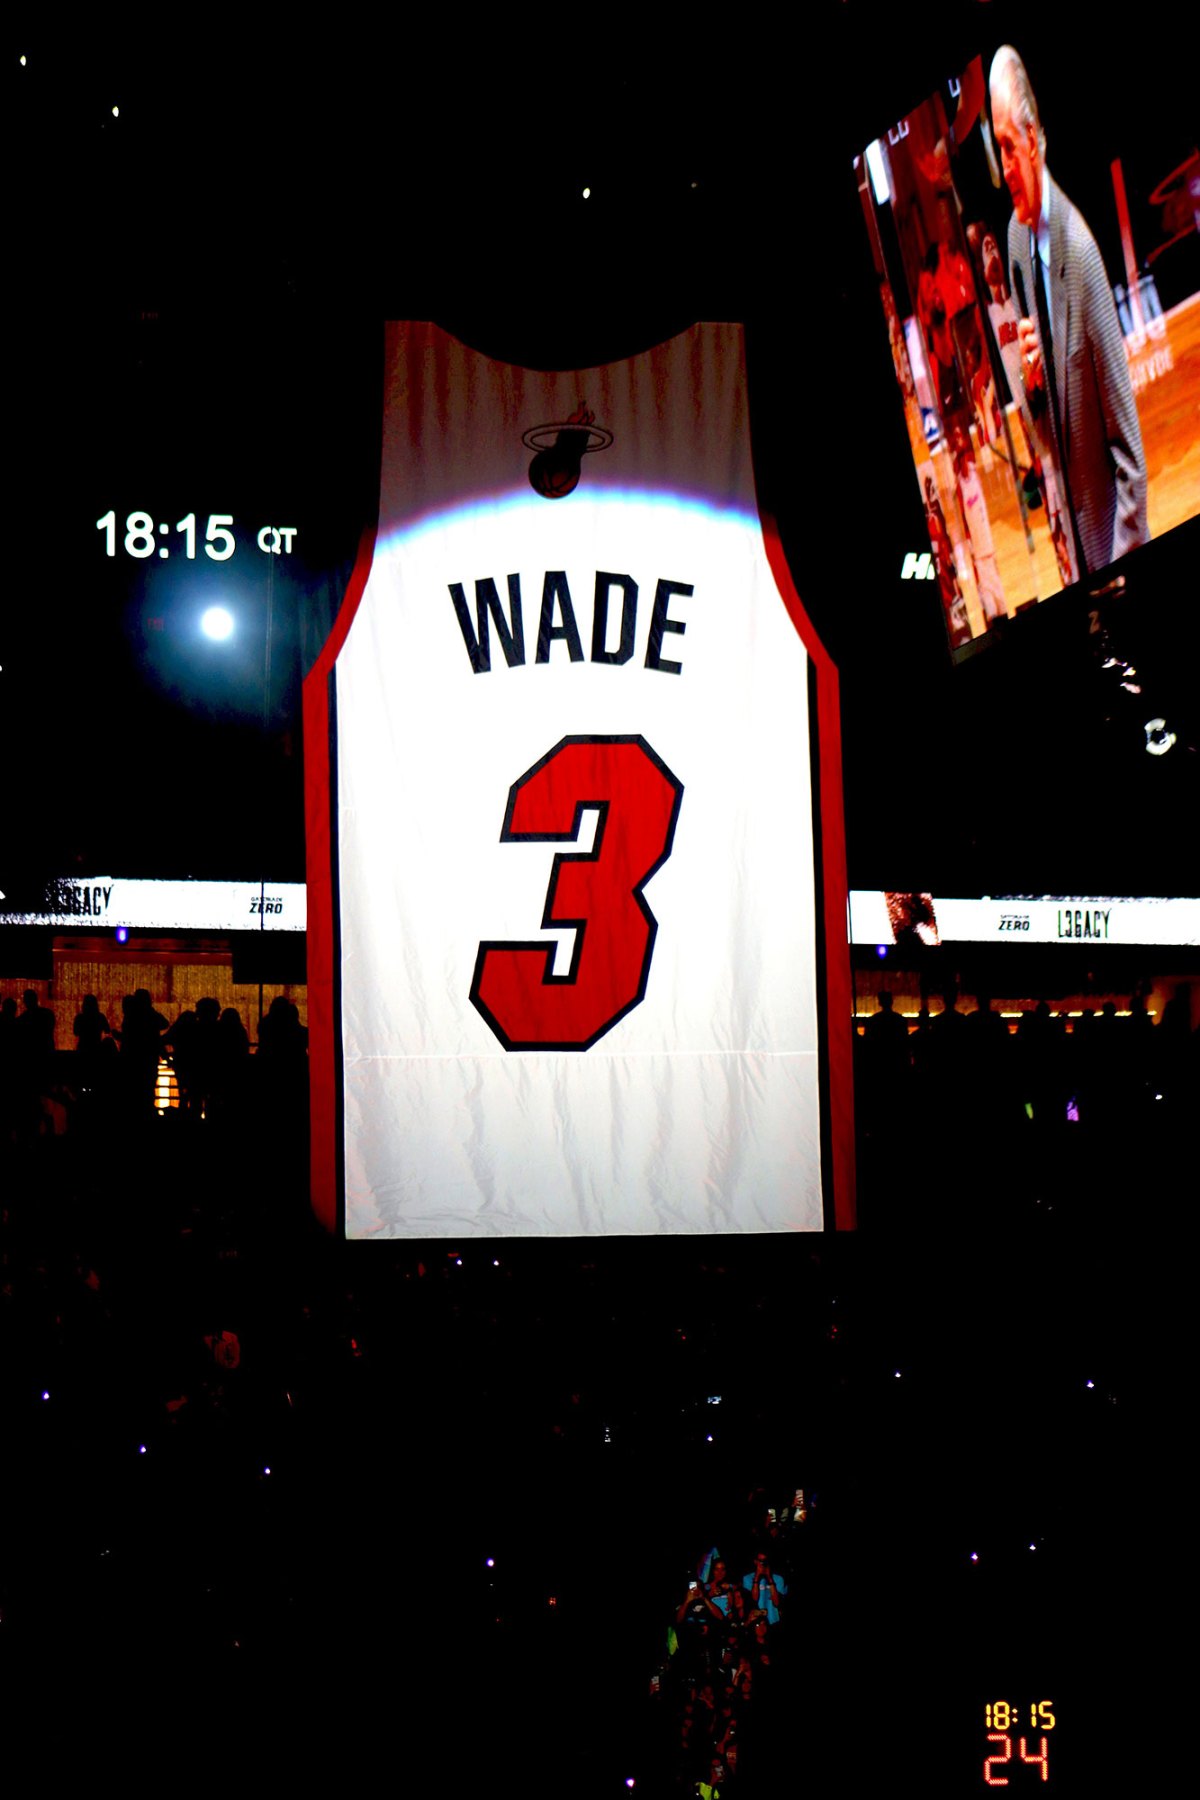 Wade jersey retired in memorable ceremony